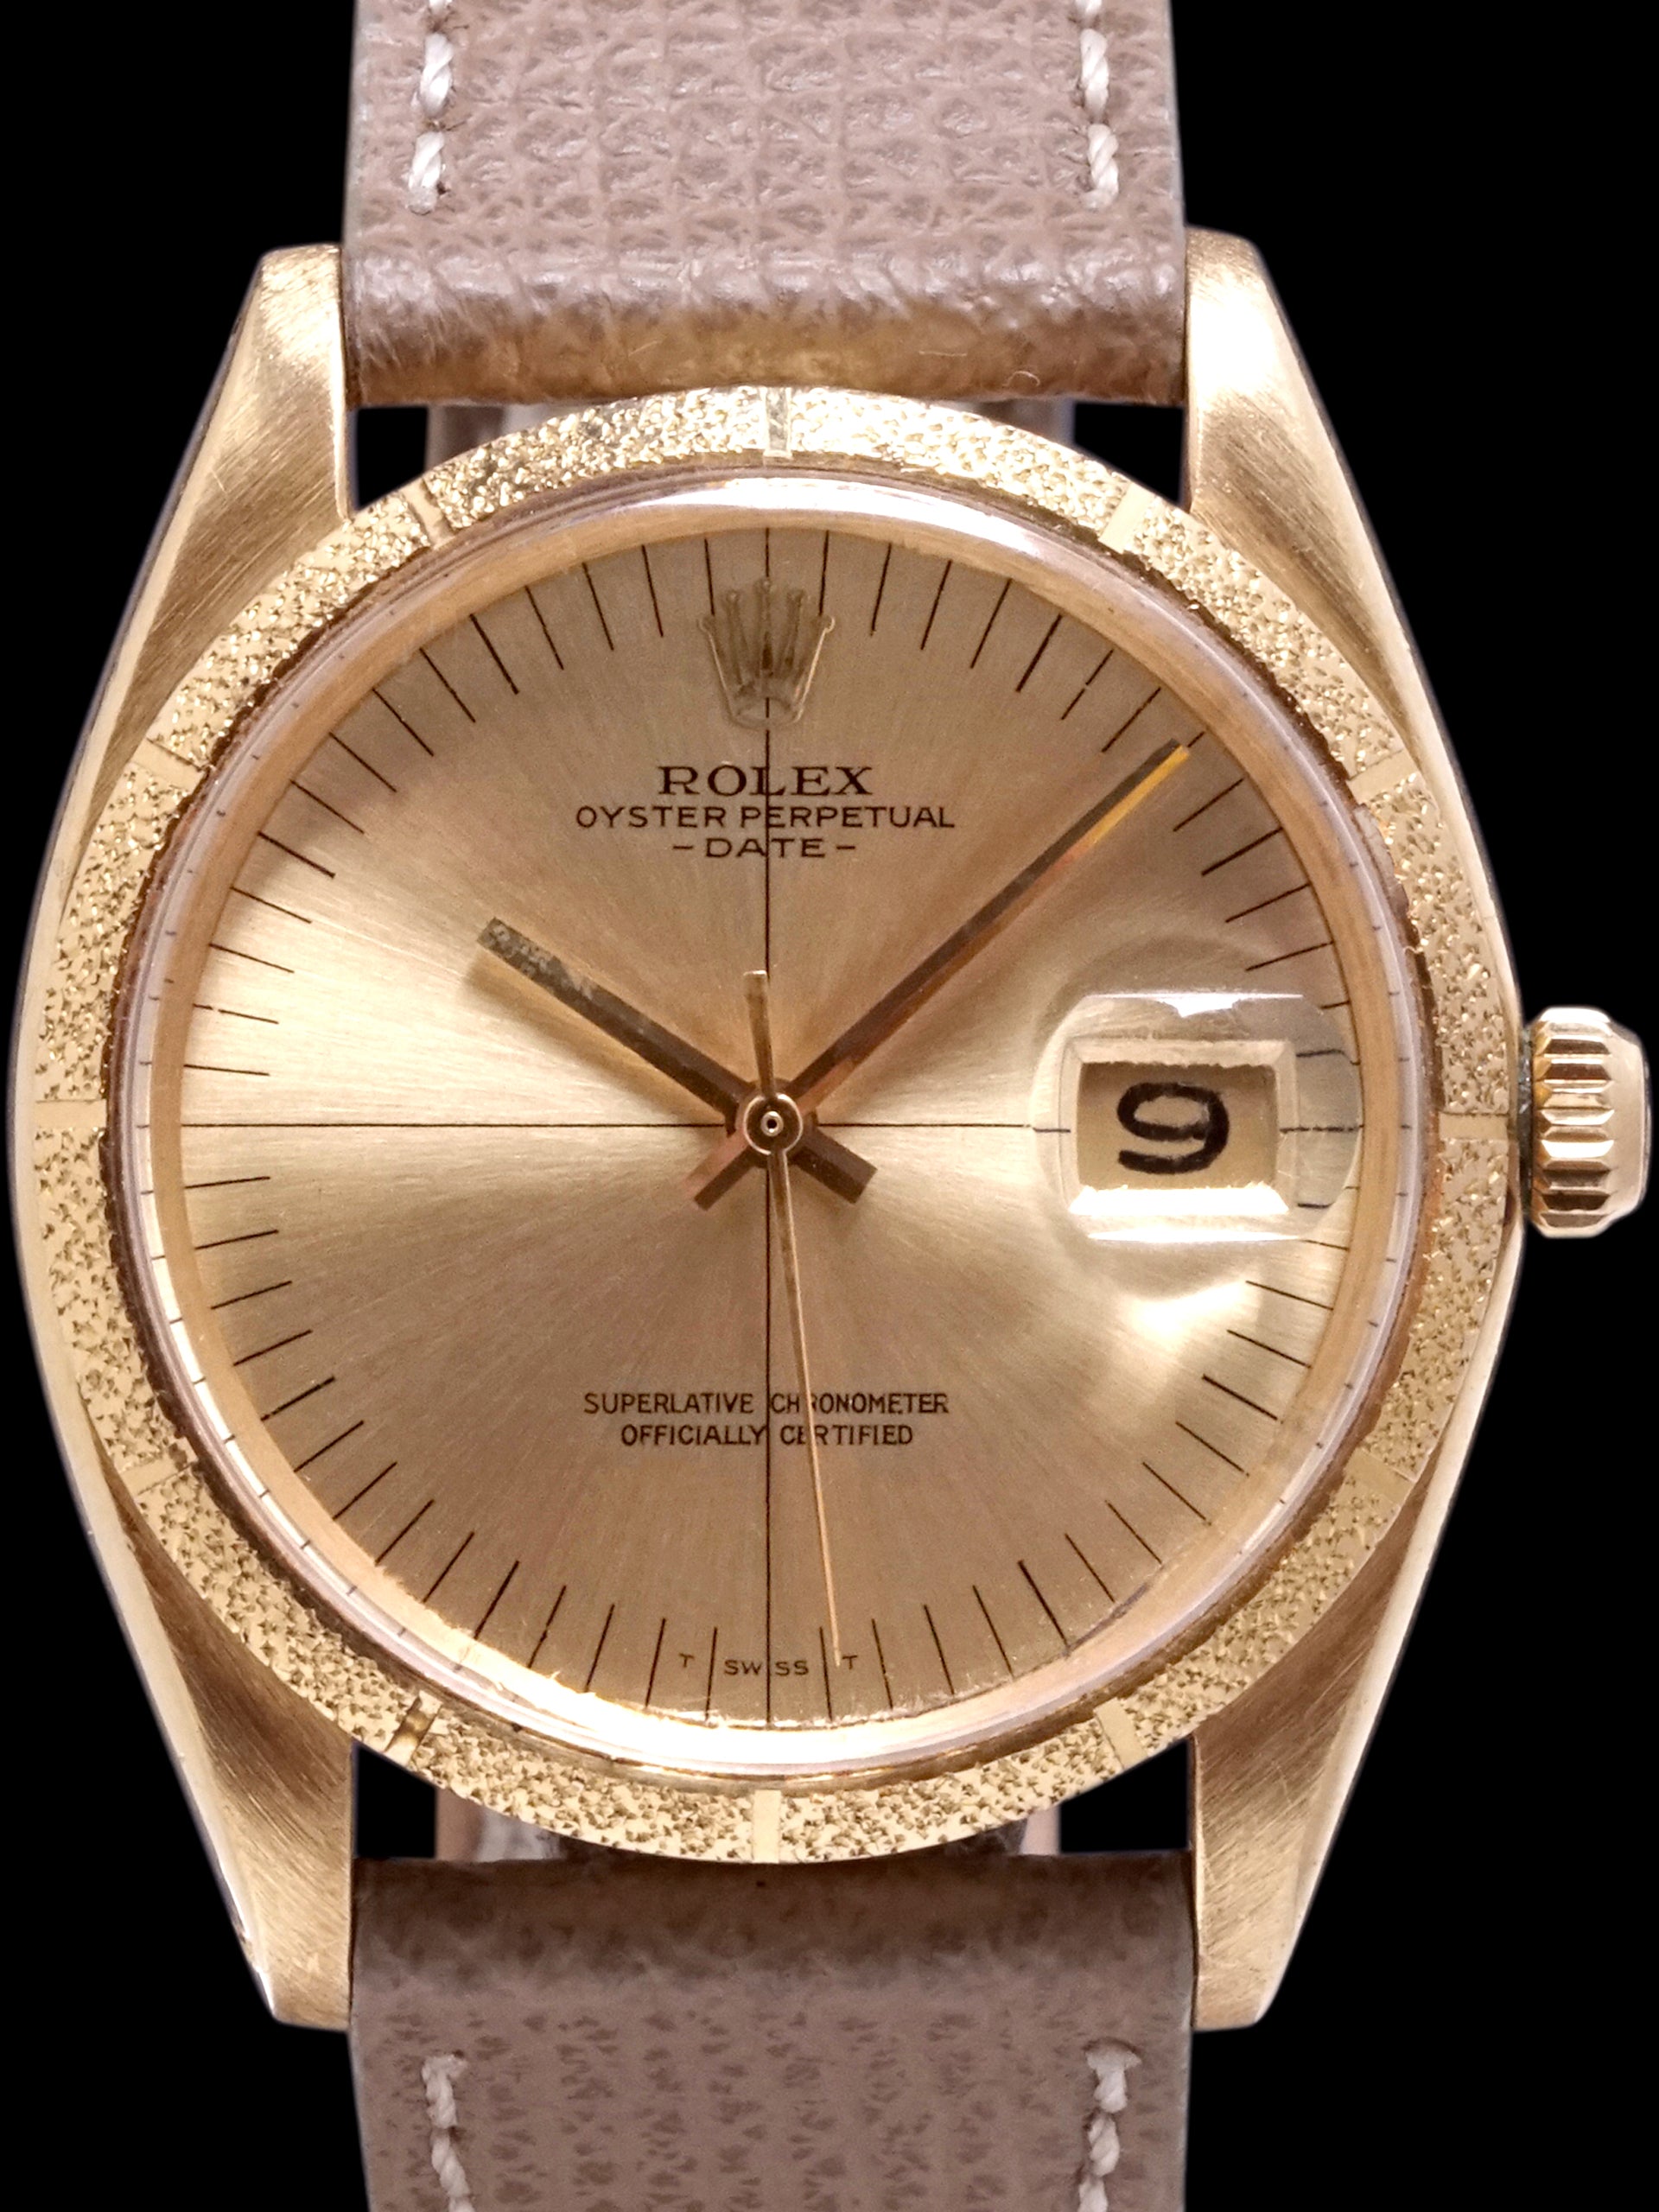 1968 Rolex Oyster-Perpetual Date (Ref. 1510) 18k YG "Zephyr Date"